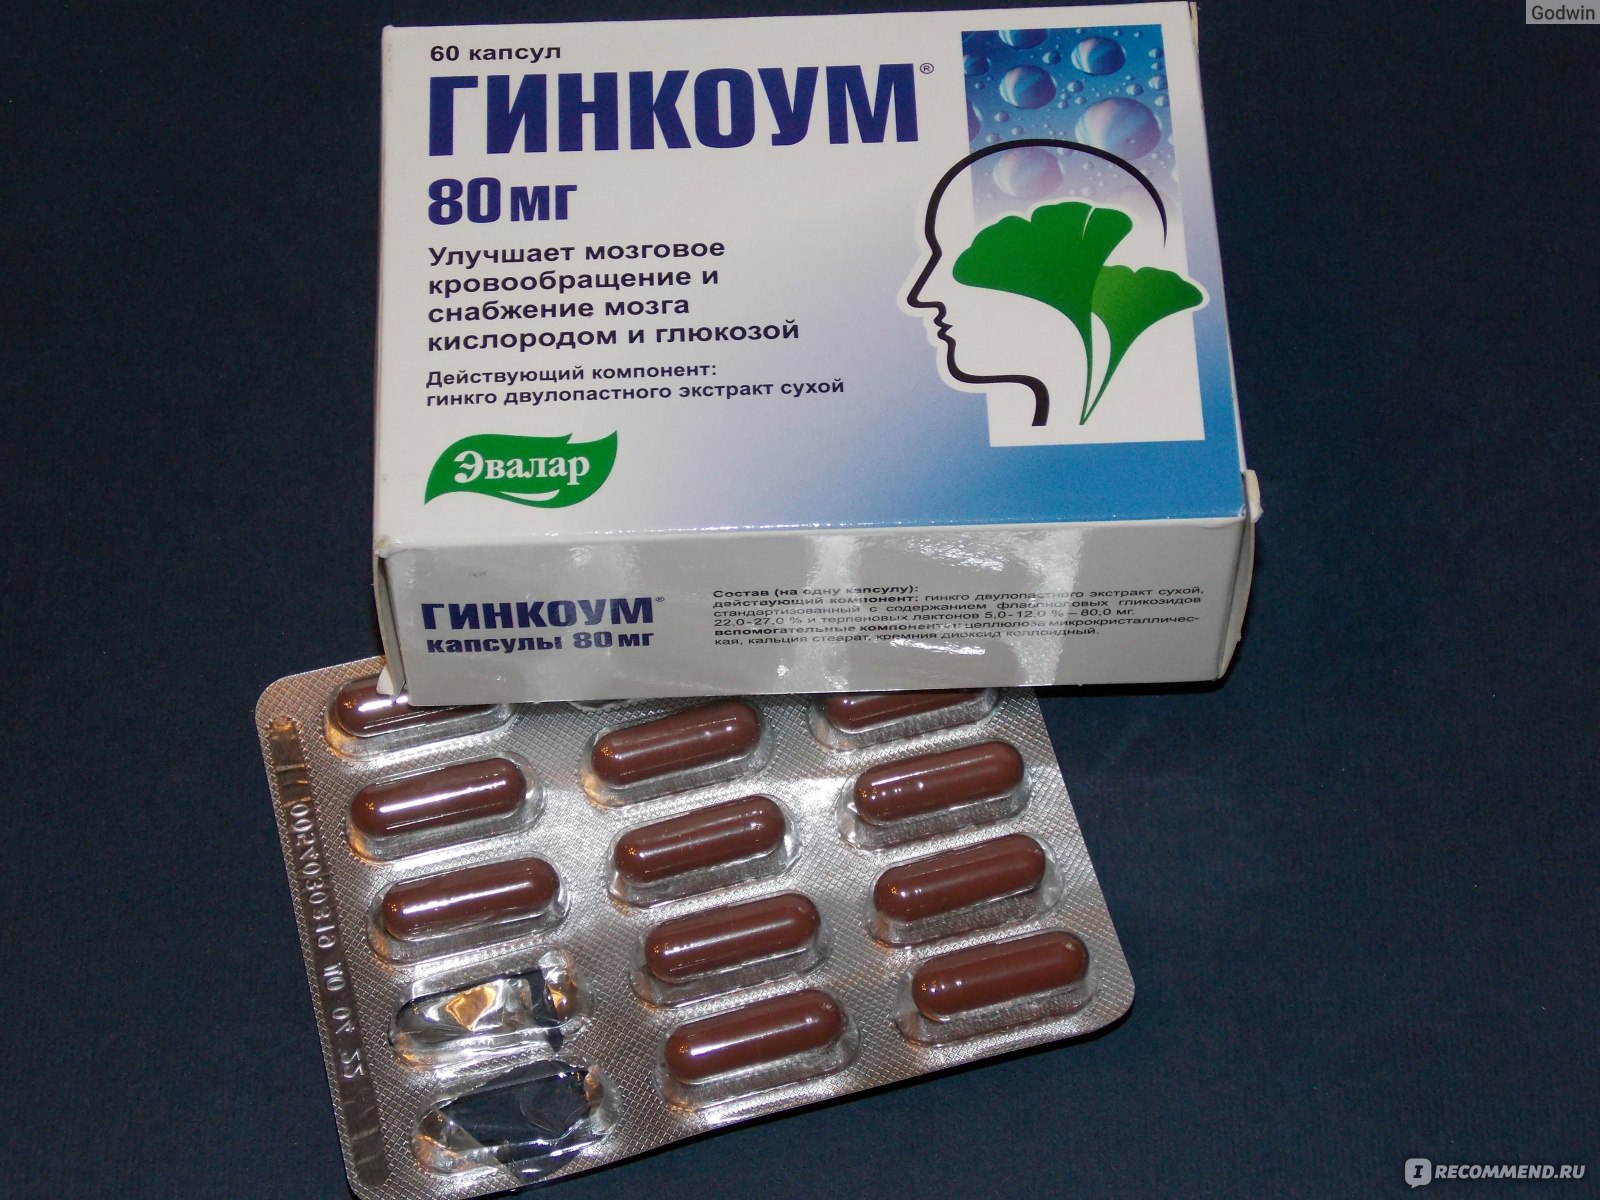 Таблетки от звона в ушах. Препарат Гинкоум Эвалар. Гинкоум 80 мг. Эвалар для мозгового кровообращения. Капсулы лекарства Гинкоум.